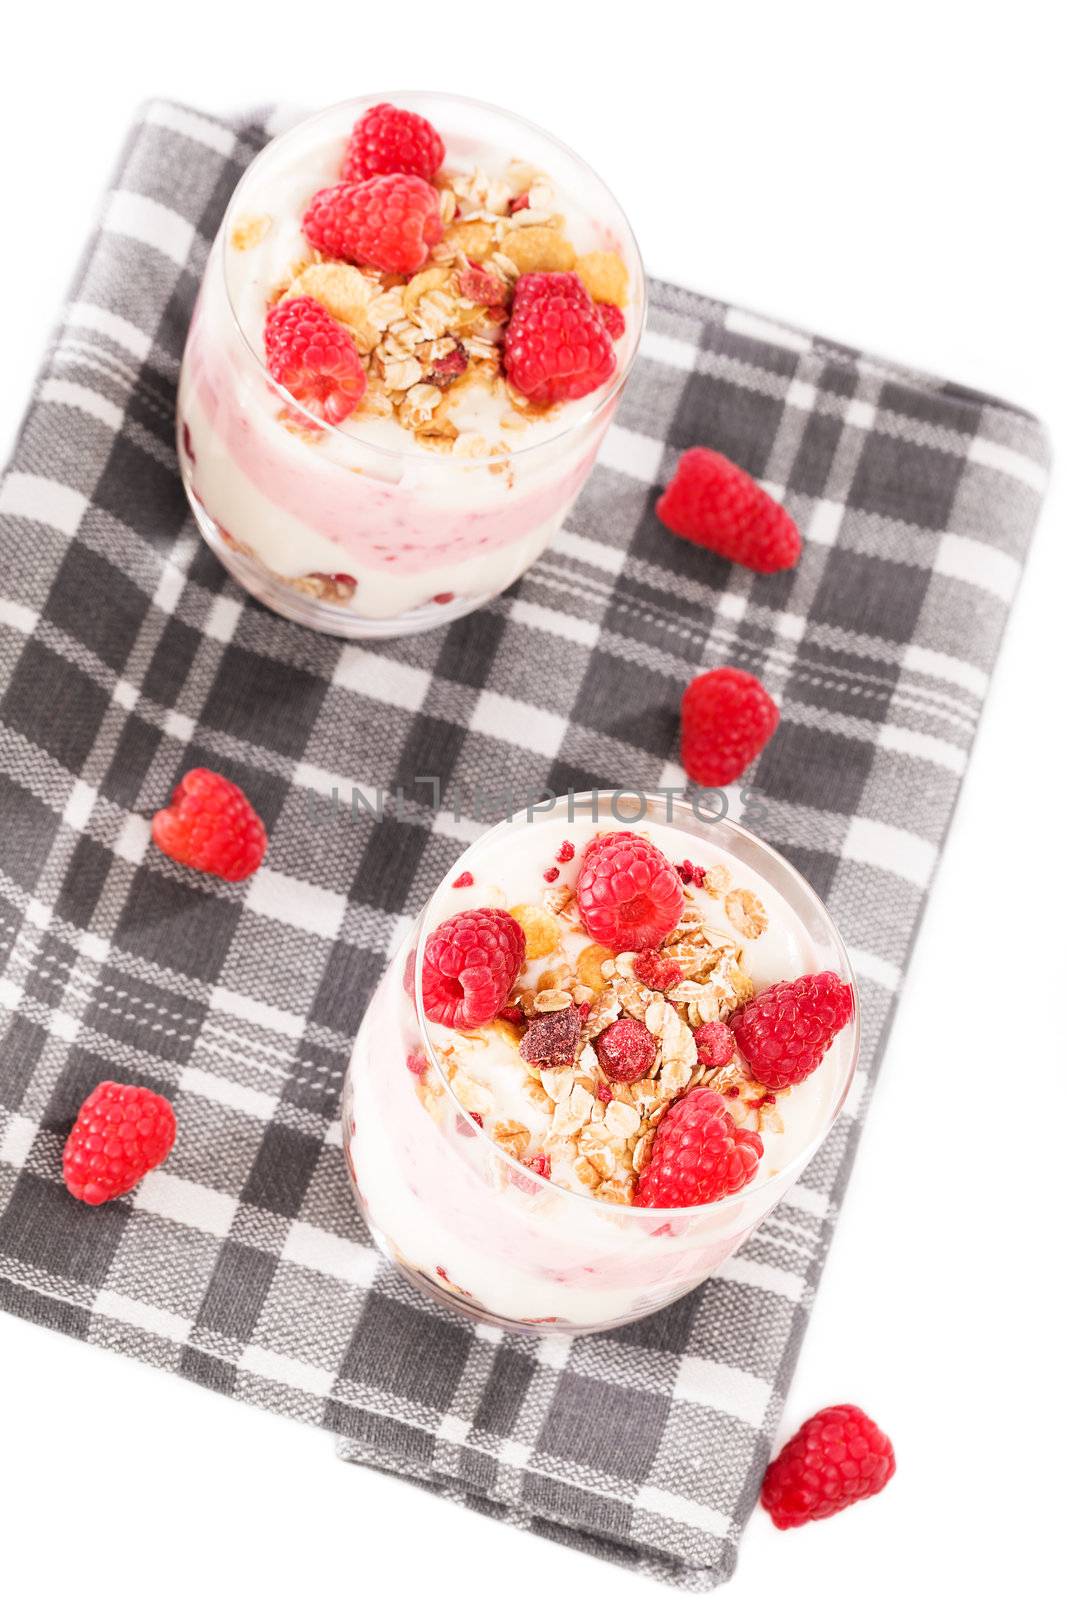 raspberry yoghurt desserts from top by RobStark